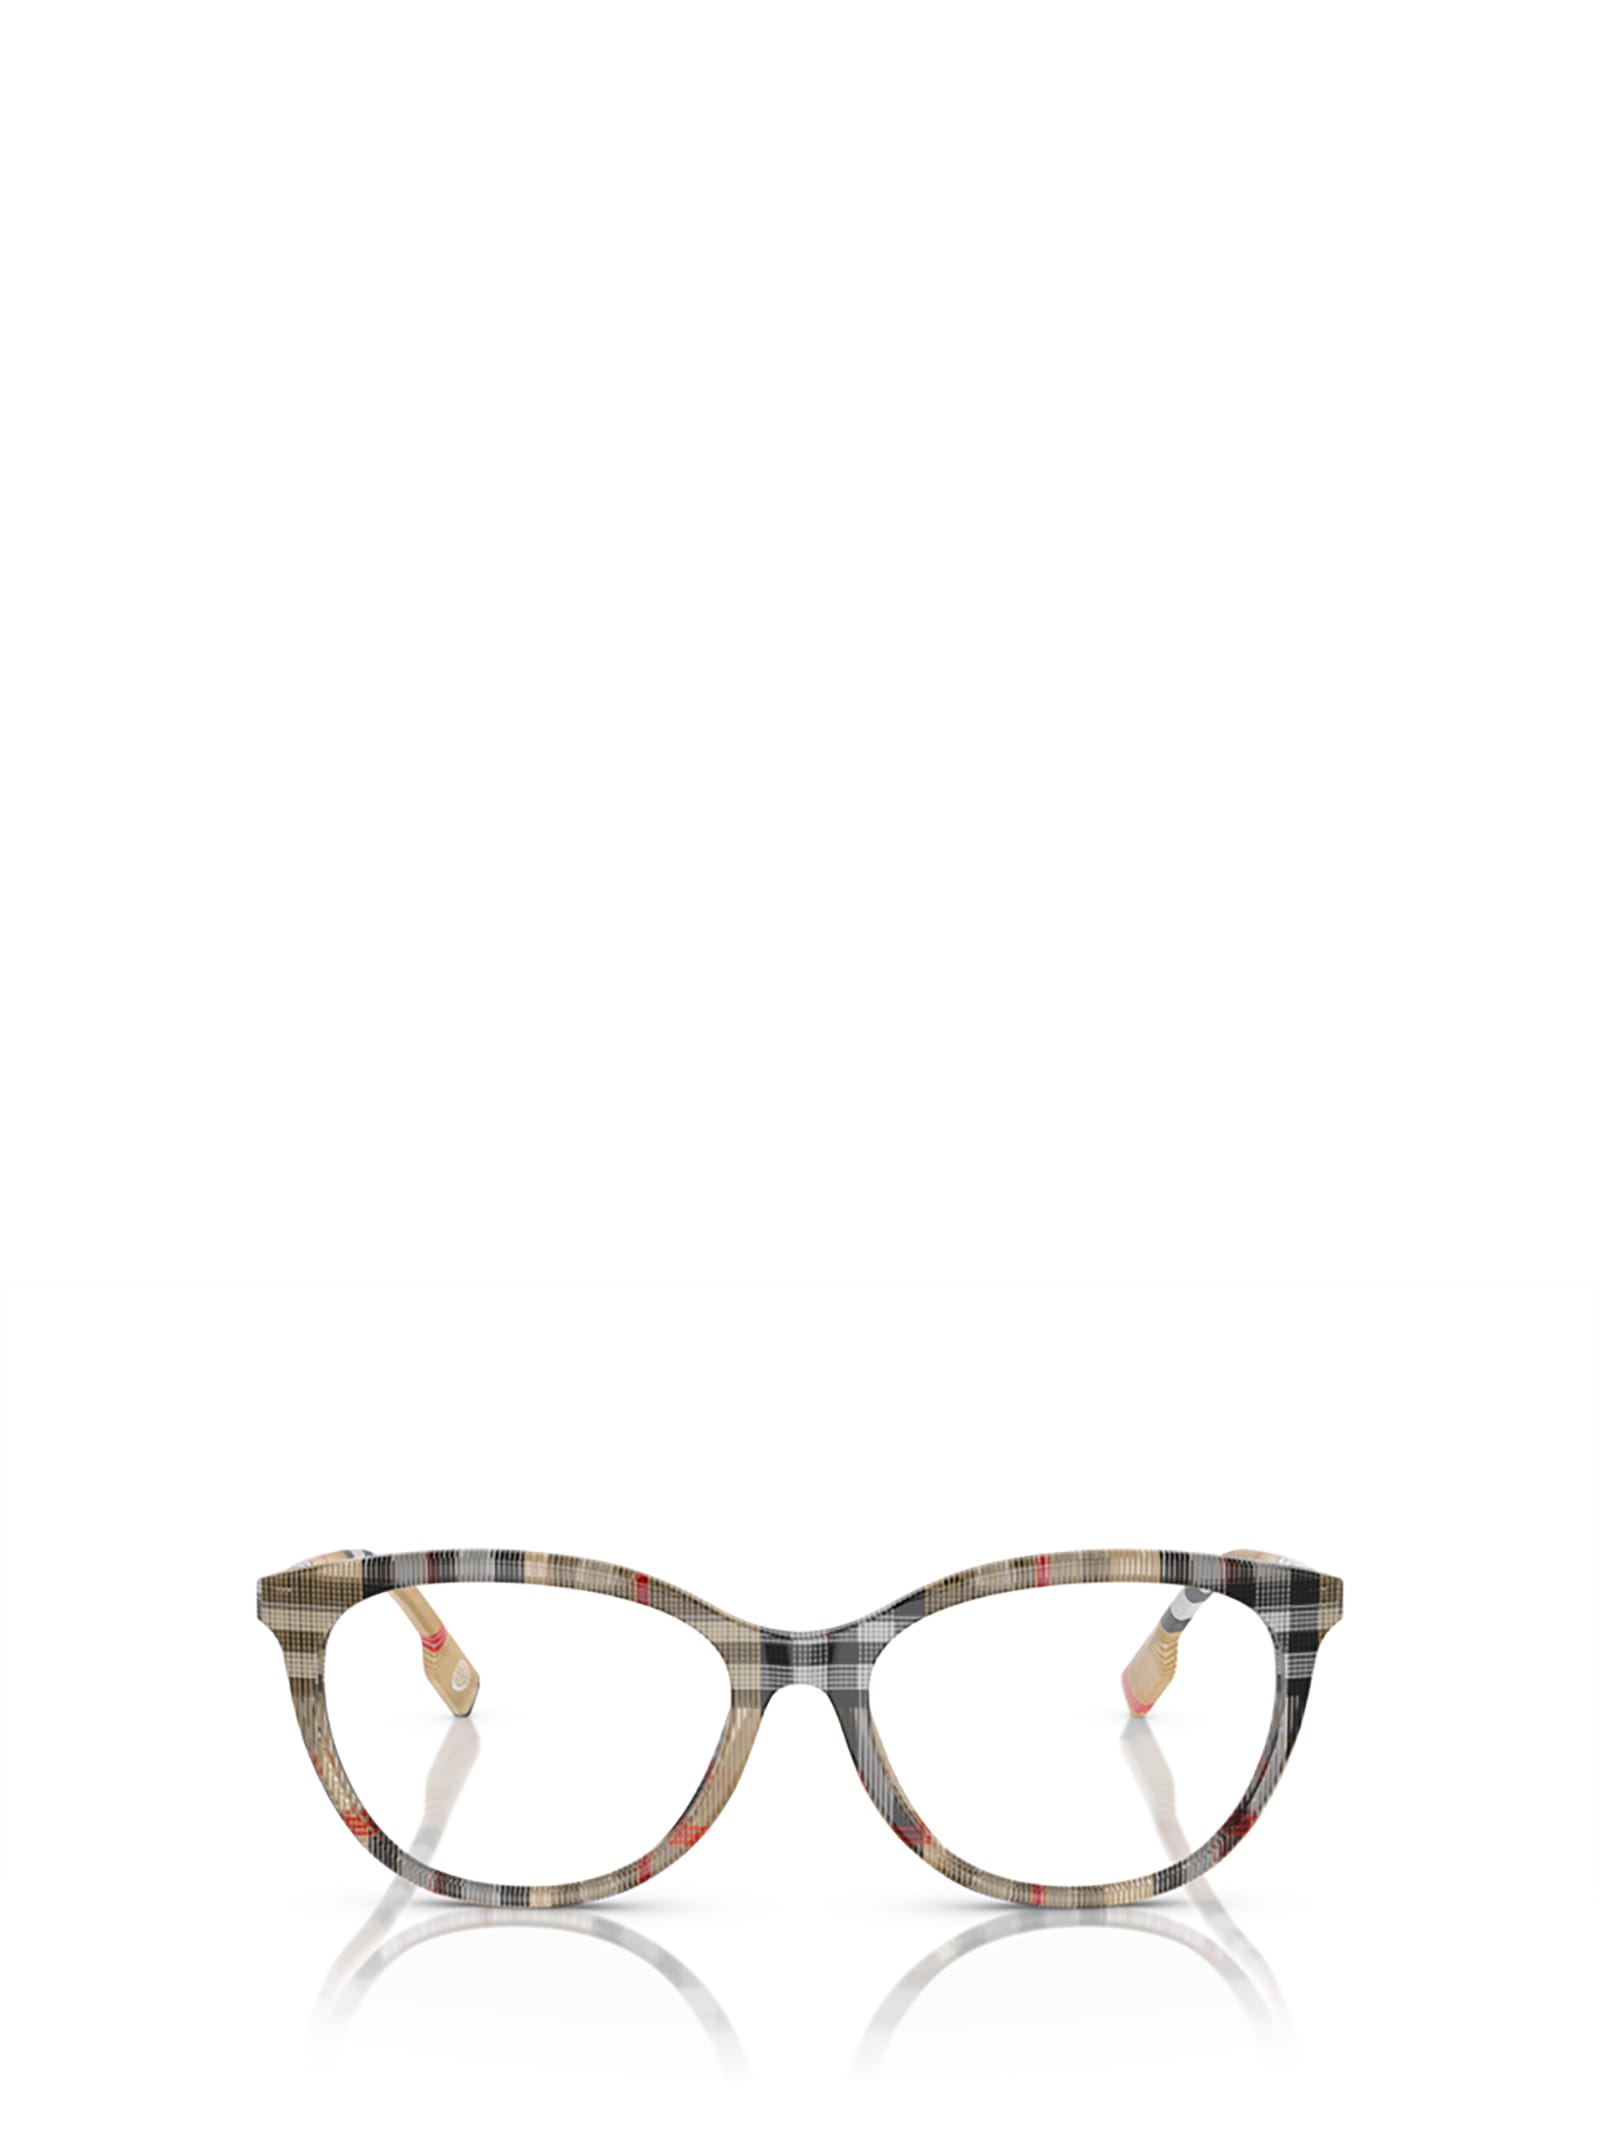 Be2389 Vintage Check Glasses